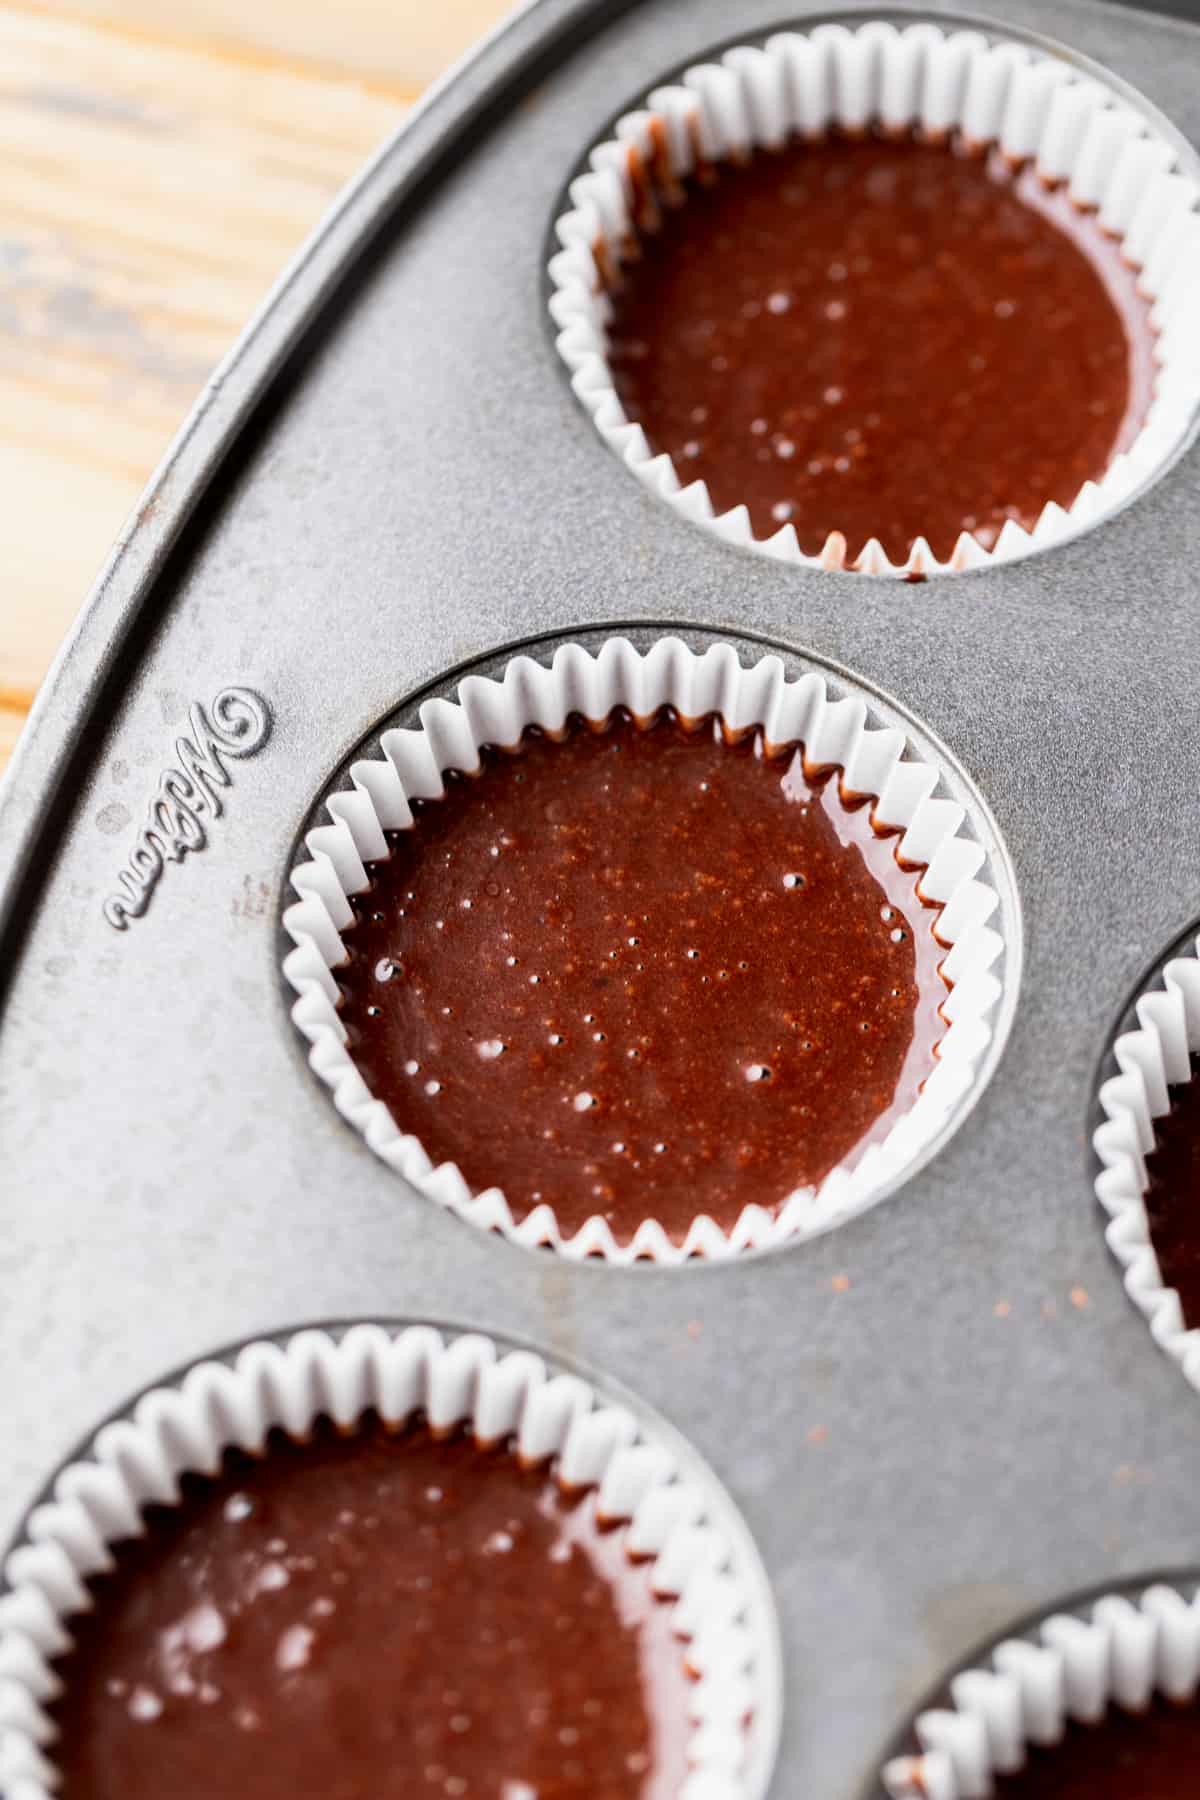 Chocolate cake batter in a cupcake pan.